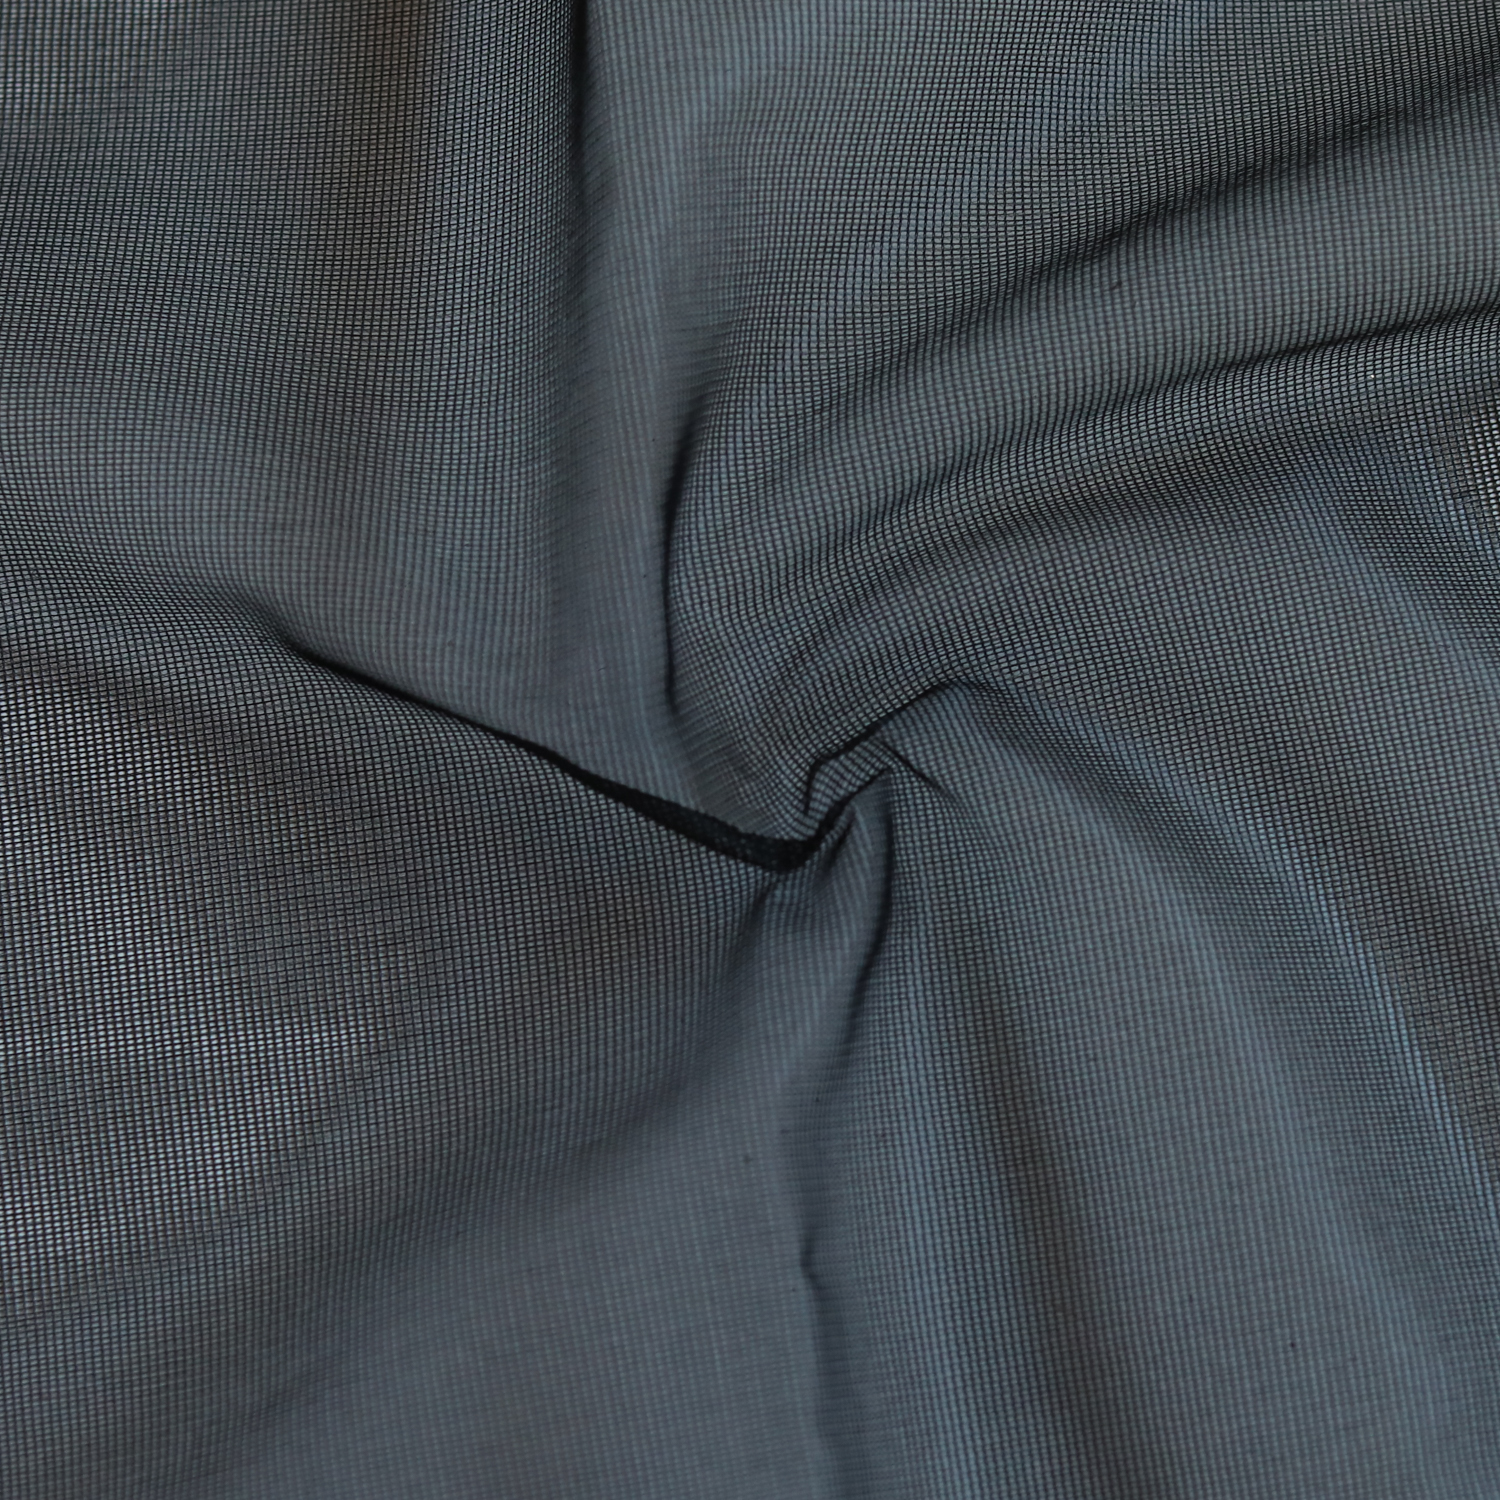 1/4 YD Black Sheer Cup Lining Fabric